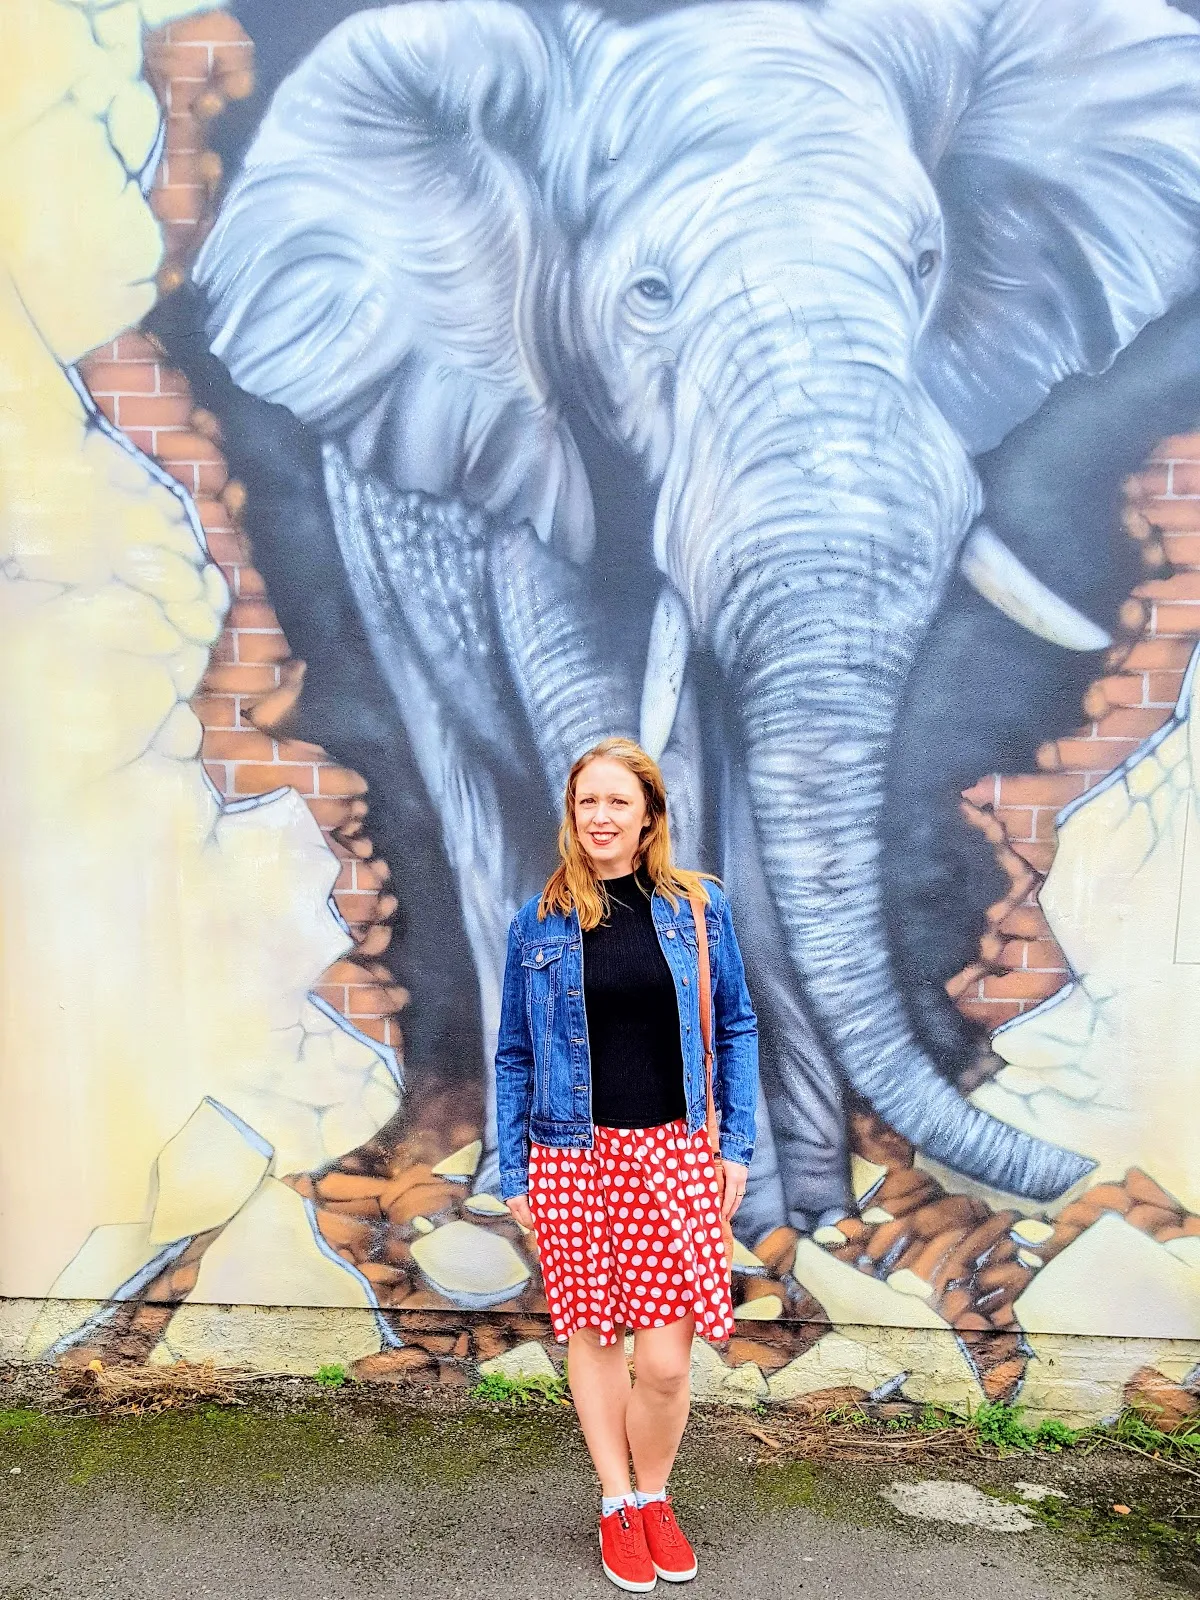 Giant Elephant Graffiti: Street Art In Loughborough